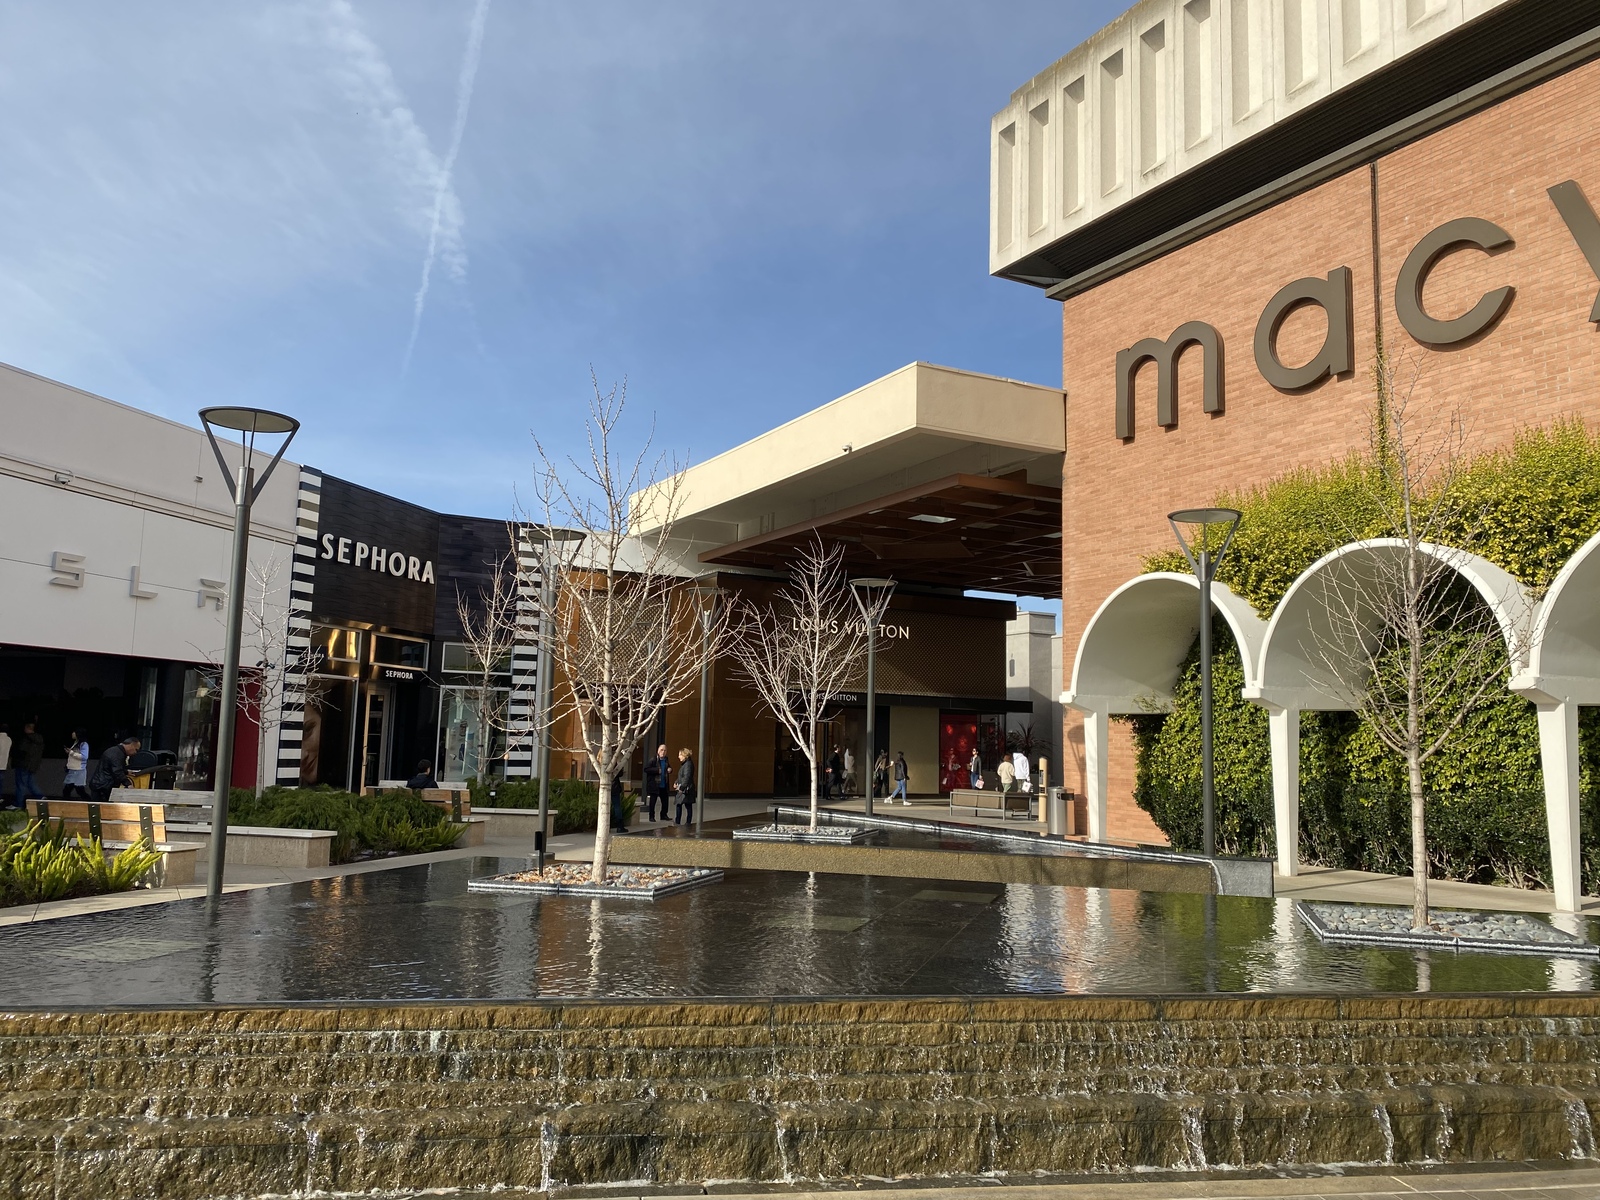 Stanford Shopping Center - Super regional mall in Palo Alto